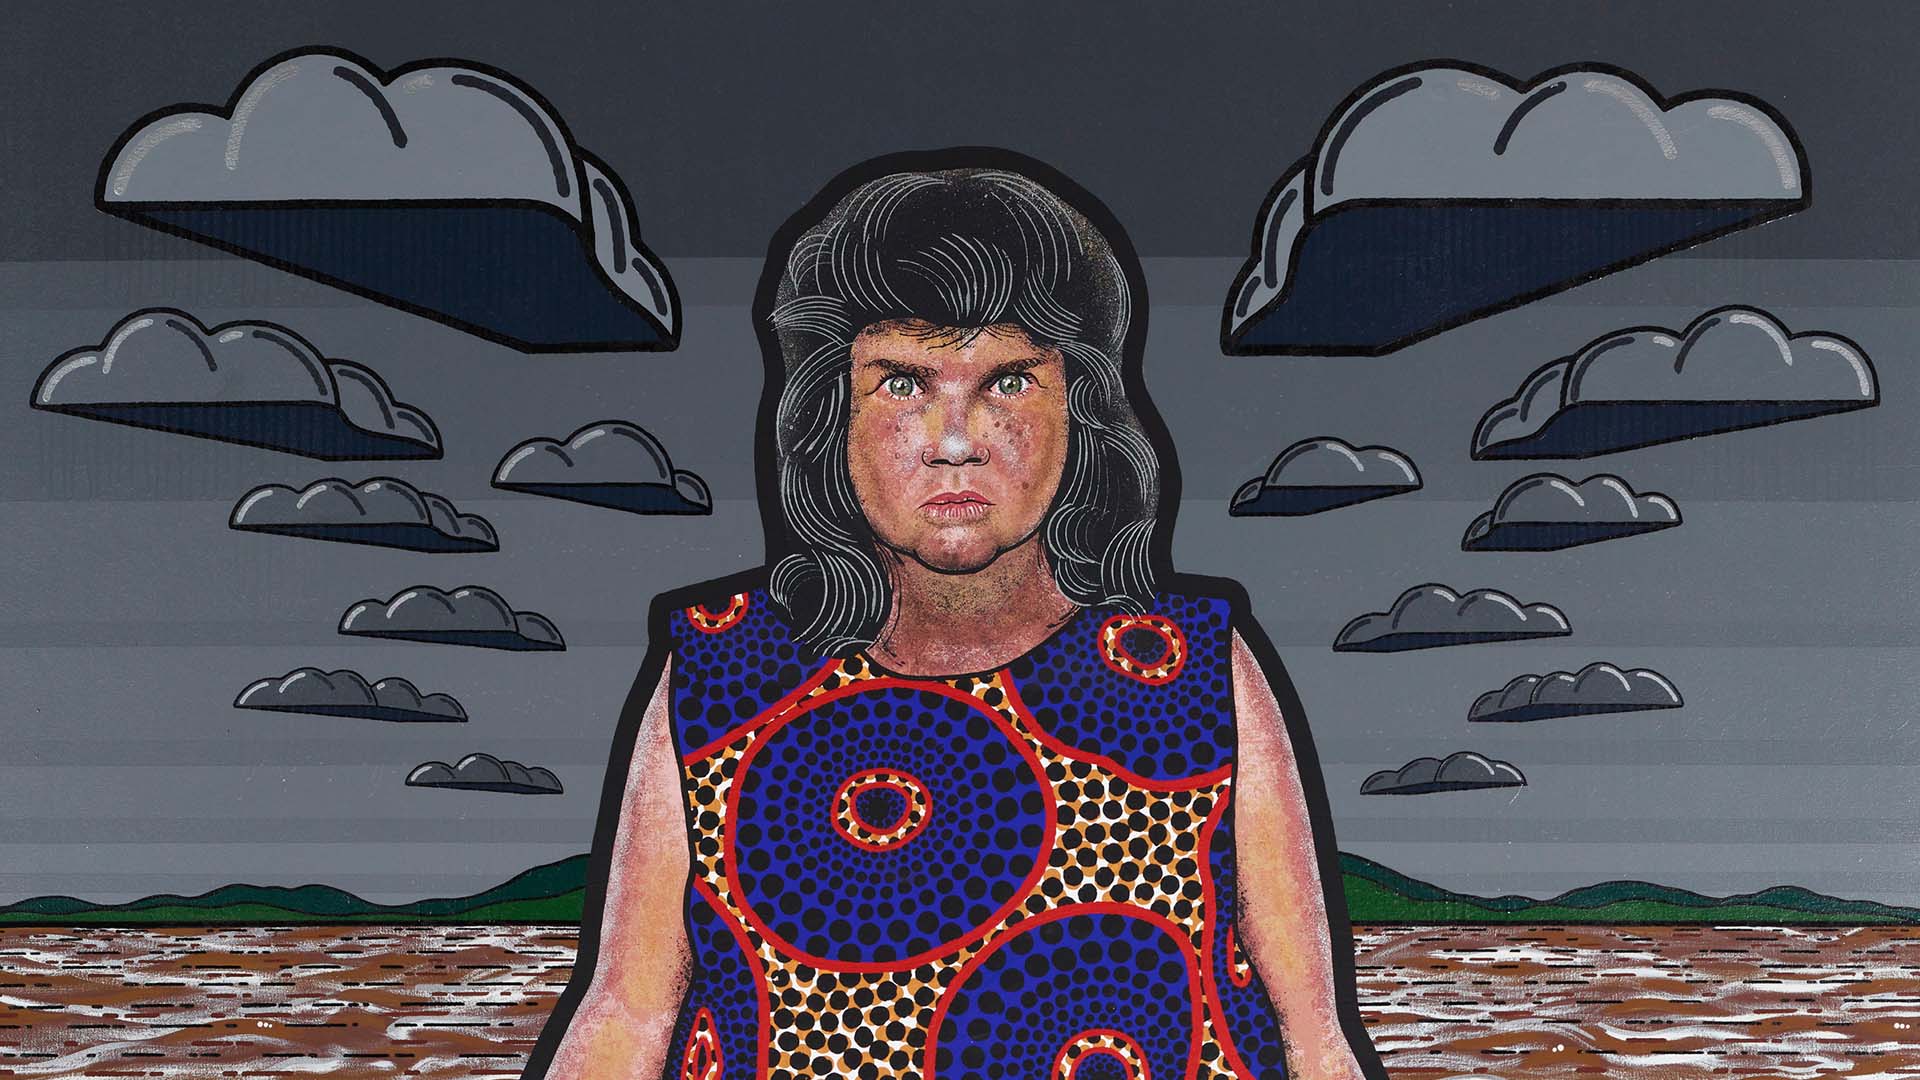 The Archibald Prize 2022 on Tour